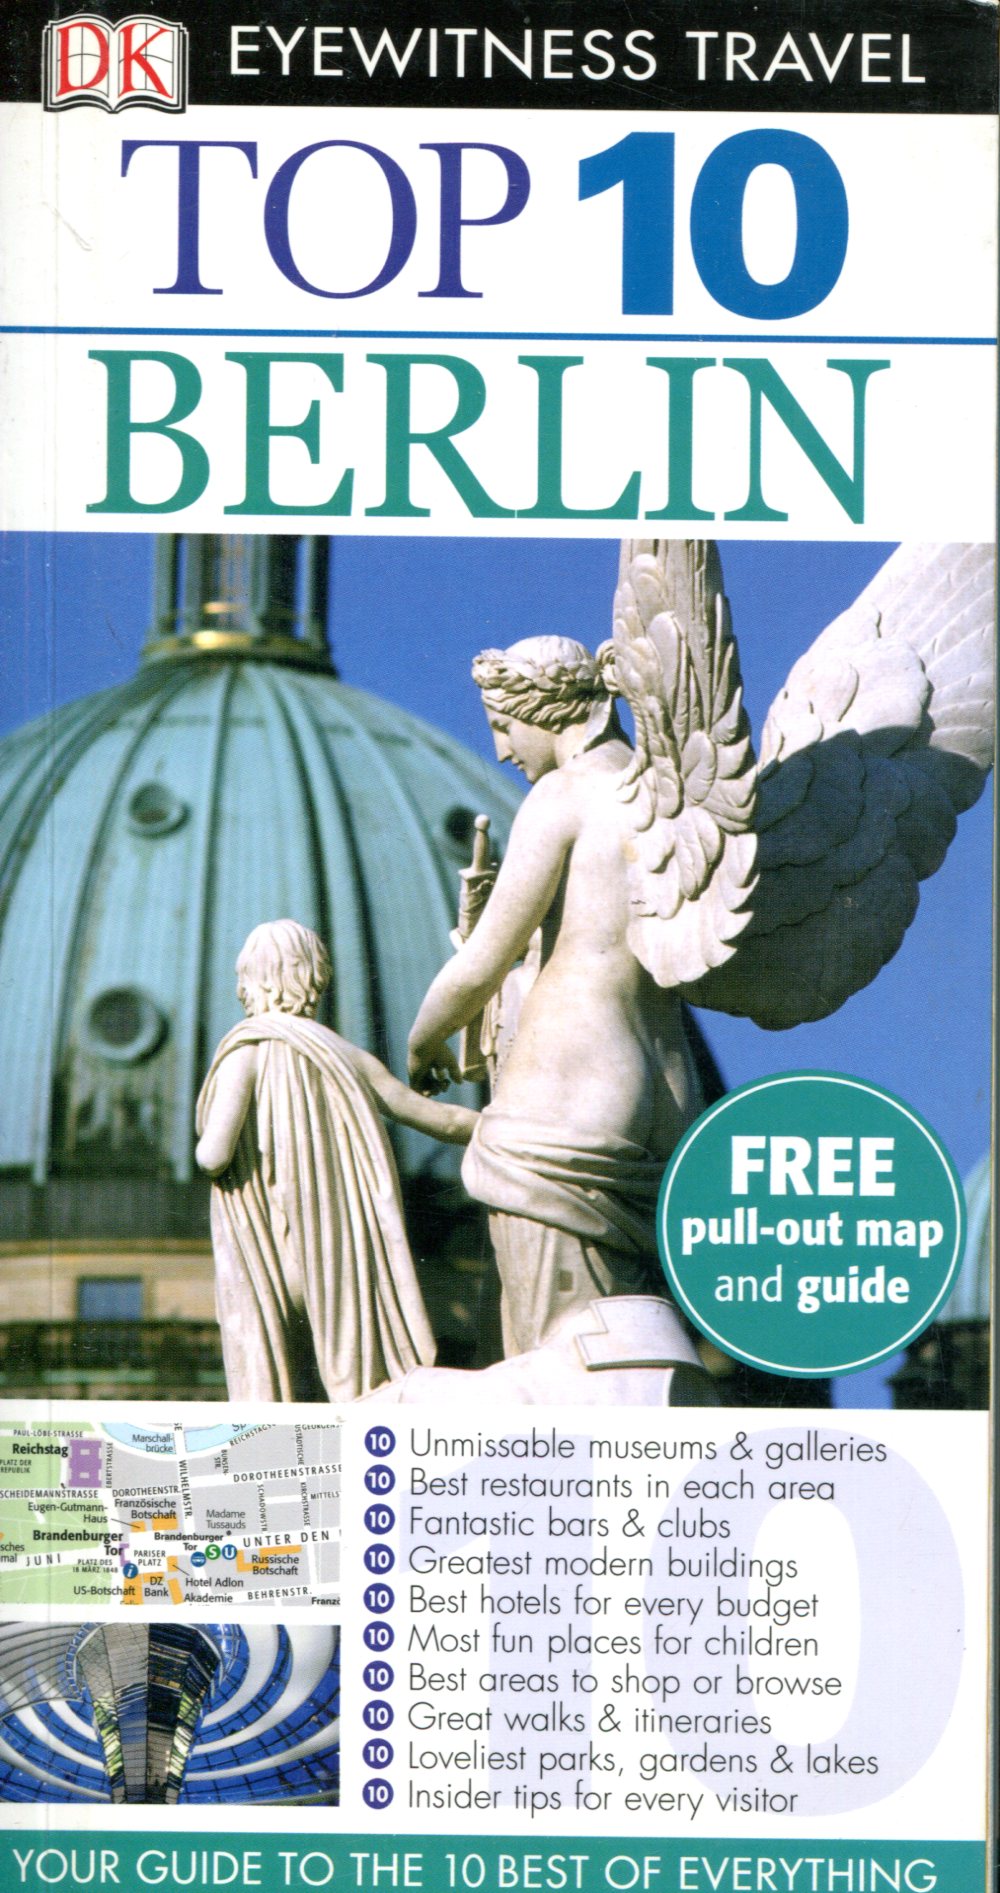 Top 10 Berlin - DK Eyewitness travel